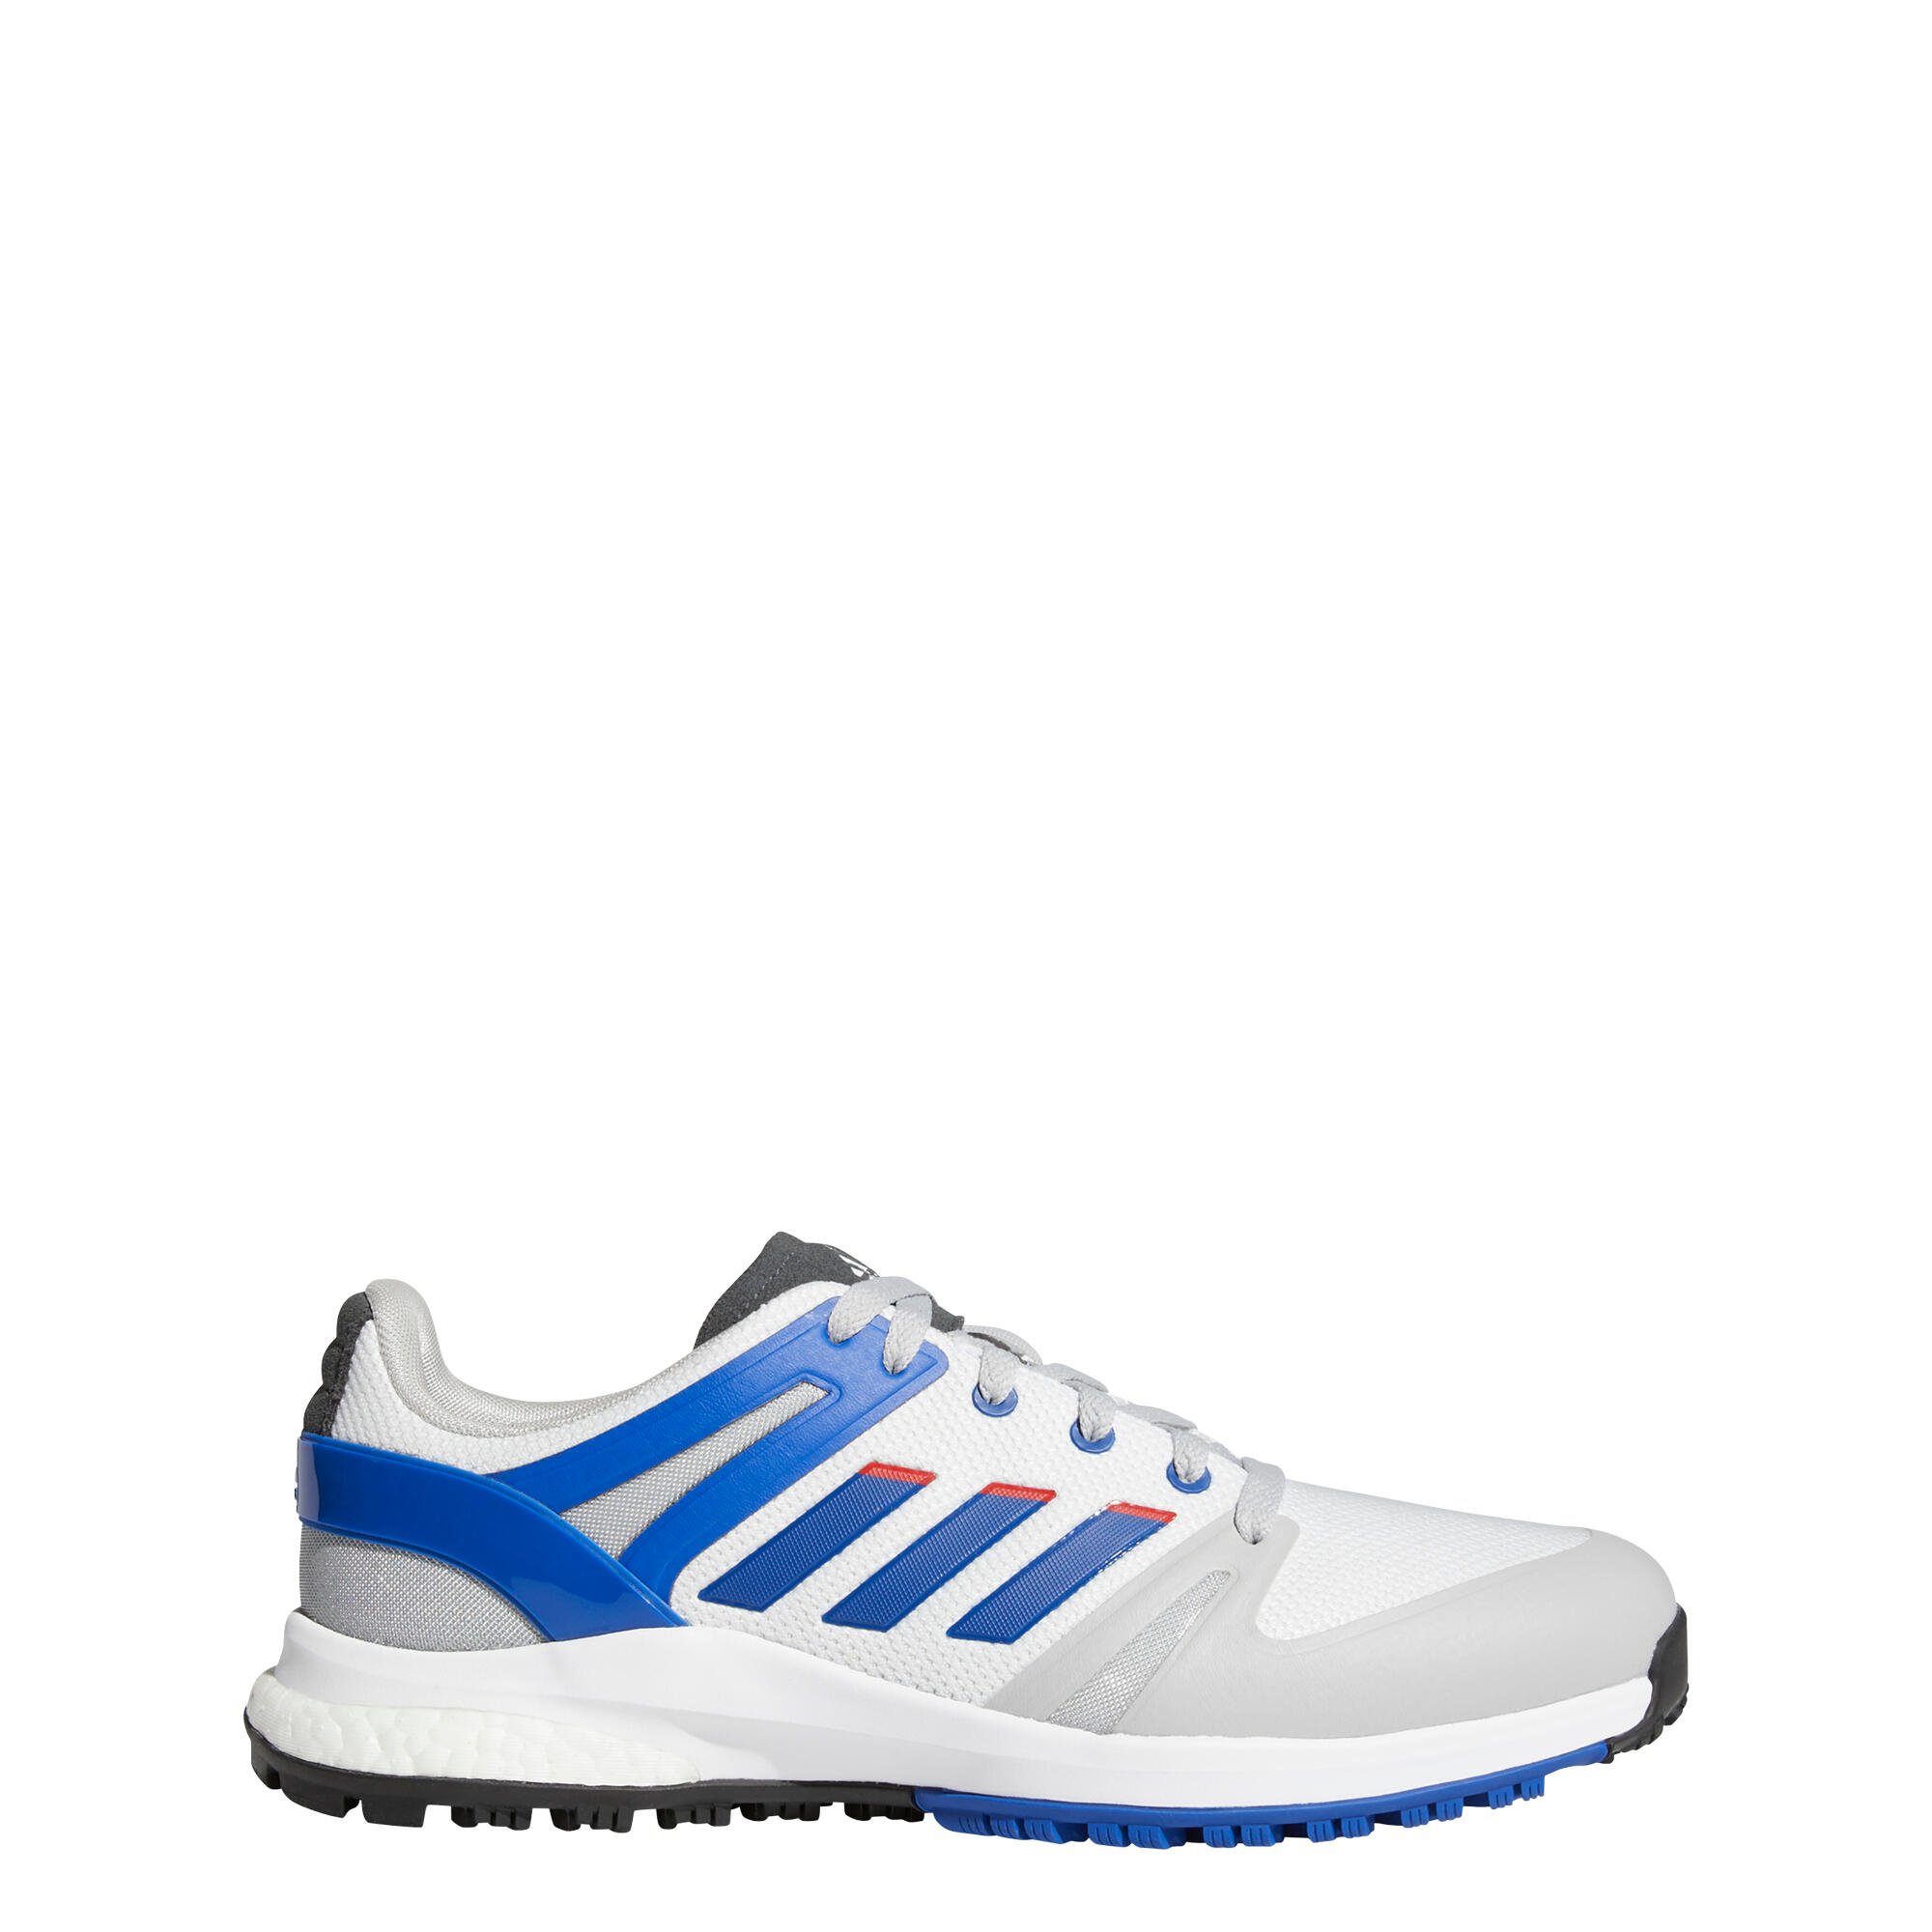 adidas EQT SL Golf Shoes - White/Blue/Grey2 2/5